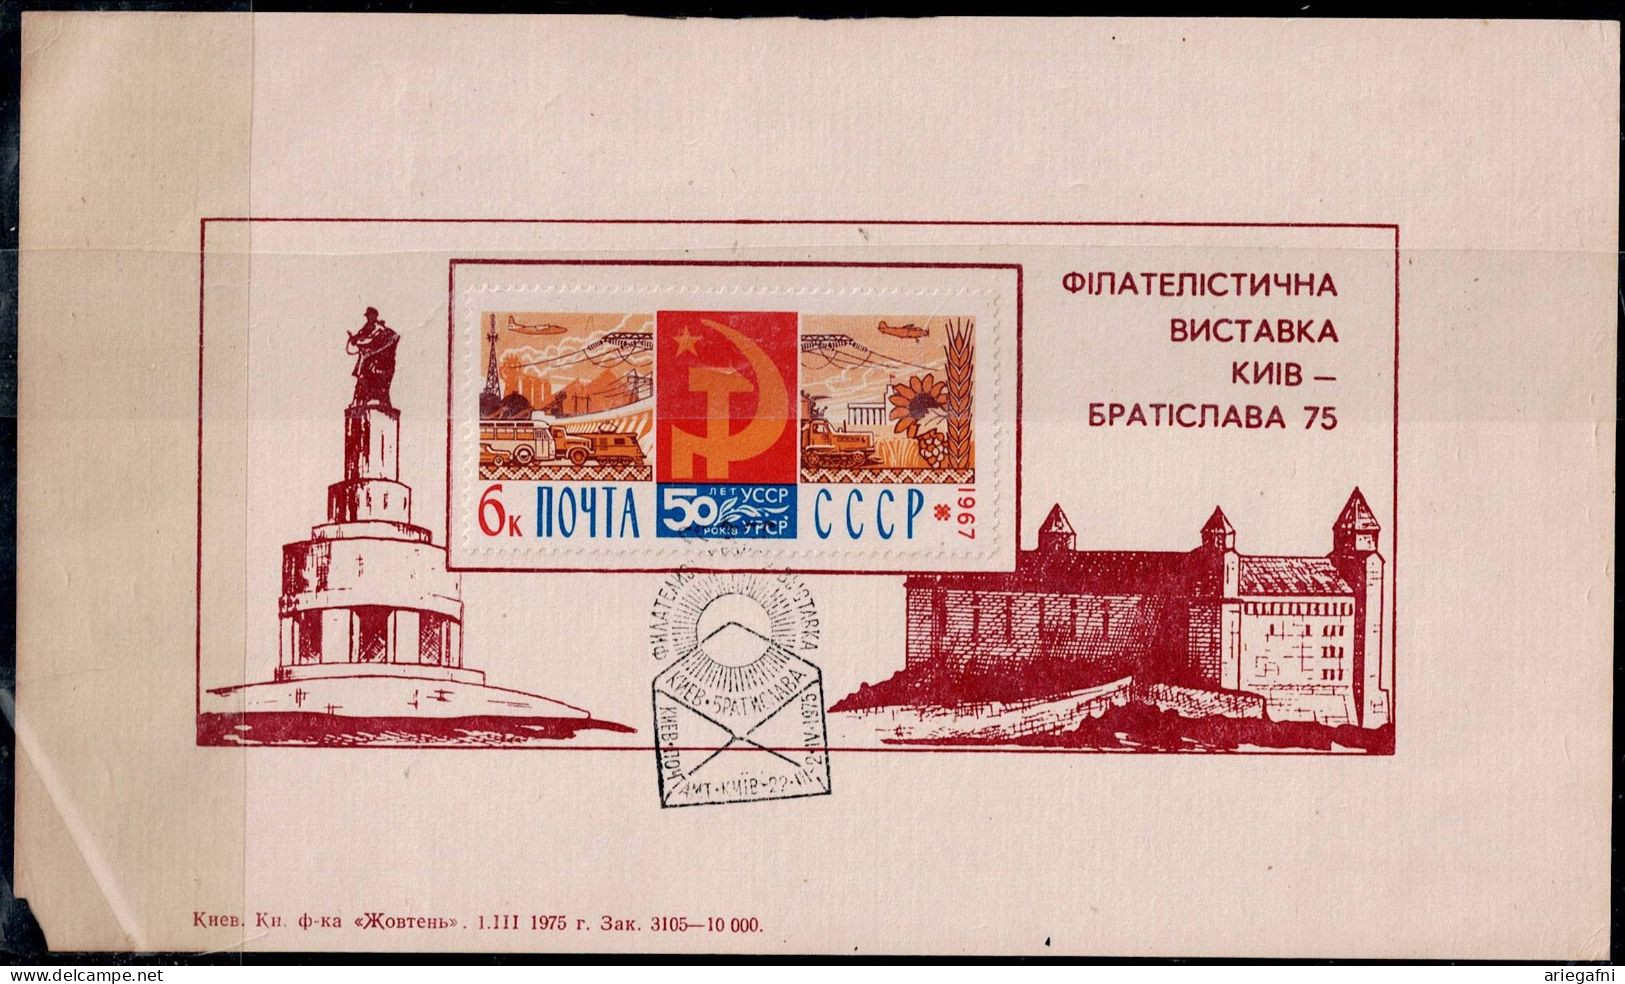 RUSSIA 1975 TICKET TO THE PHILATELIST EXHIBITION KIEV-BRATISLAVA 75 VF!! - Covers & Documents